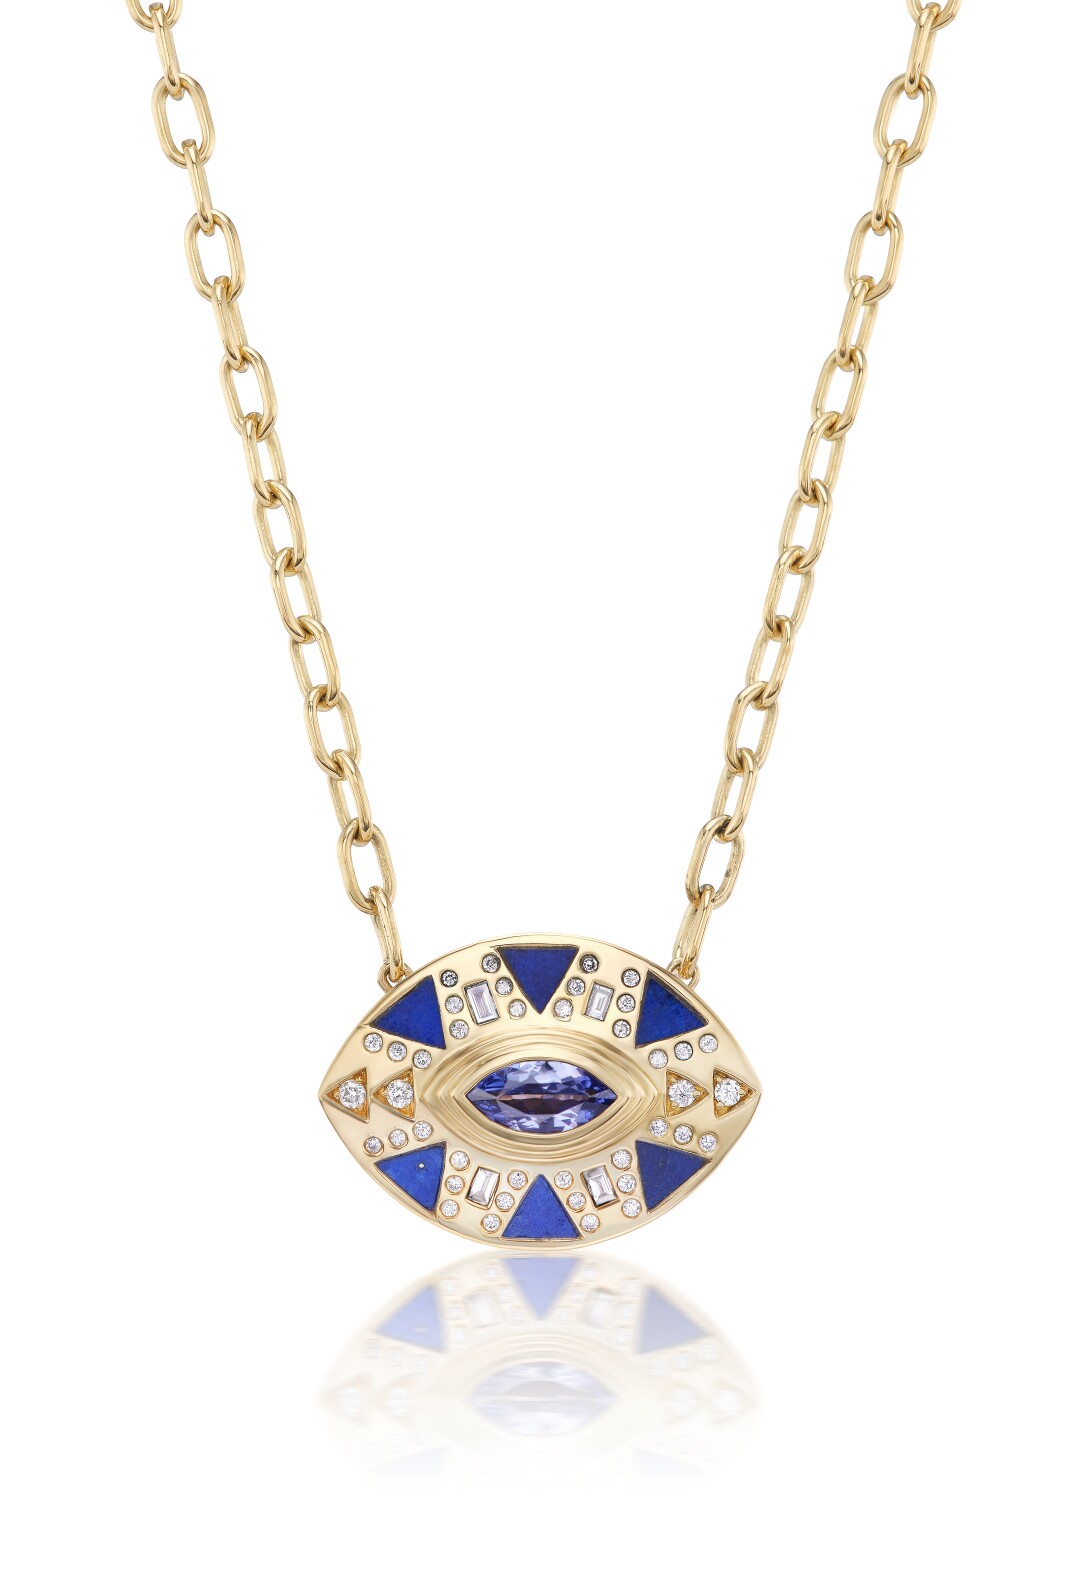 Cleo Harwell Godfrey pendant necklace, marquis blue.